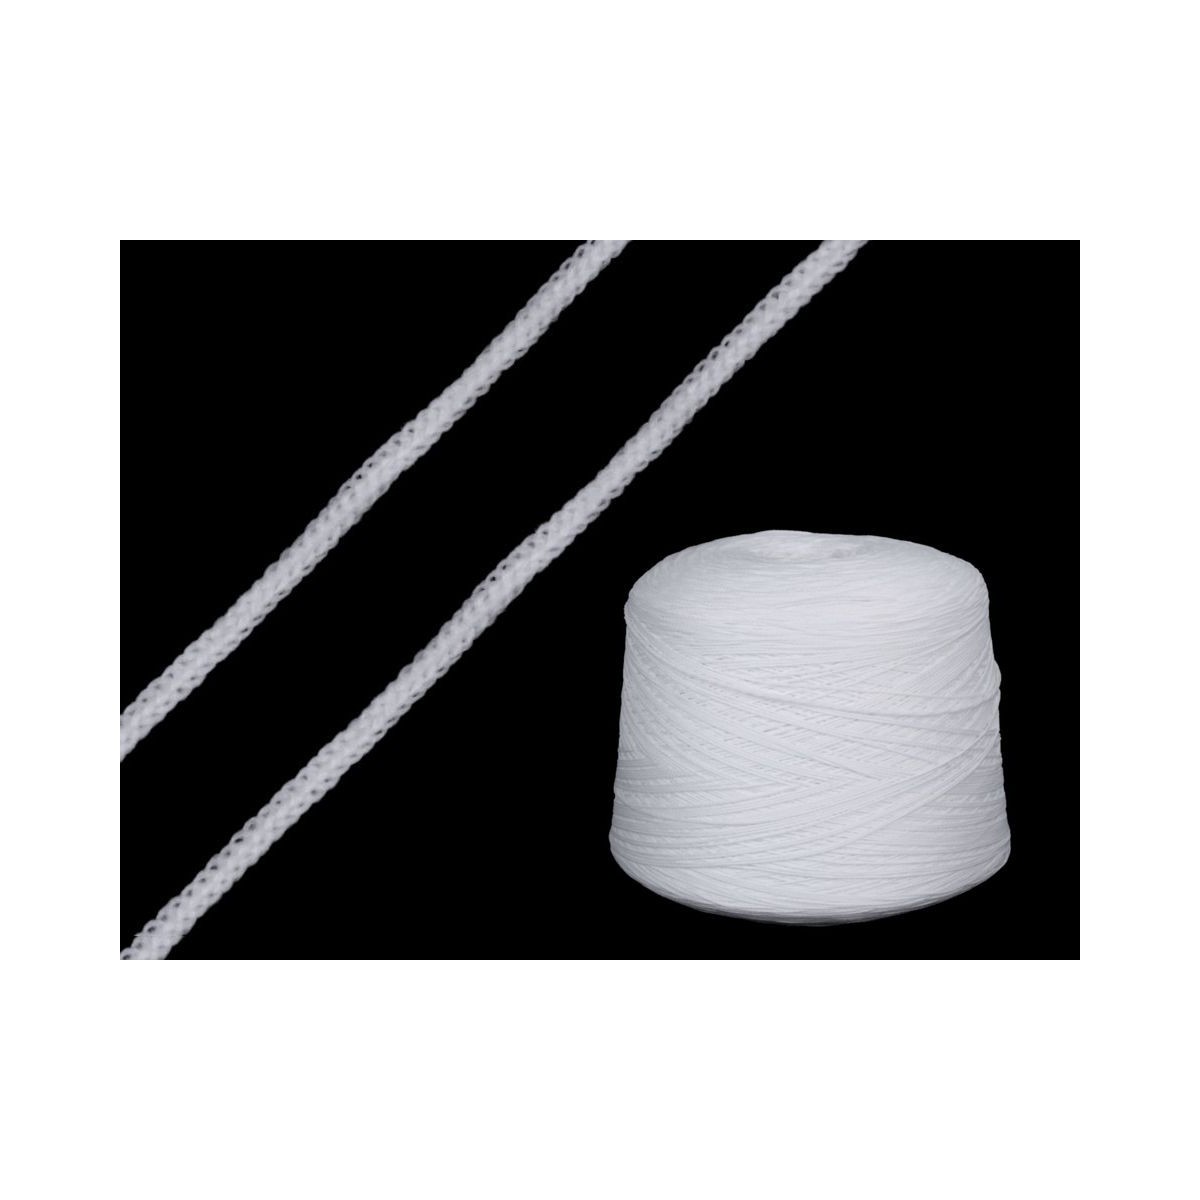 Cordón elástico elástico de cordón elástico de color blanco elástico extensible 10 m x 6 mm Artibetter 